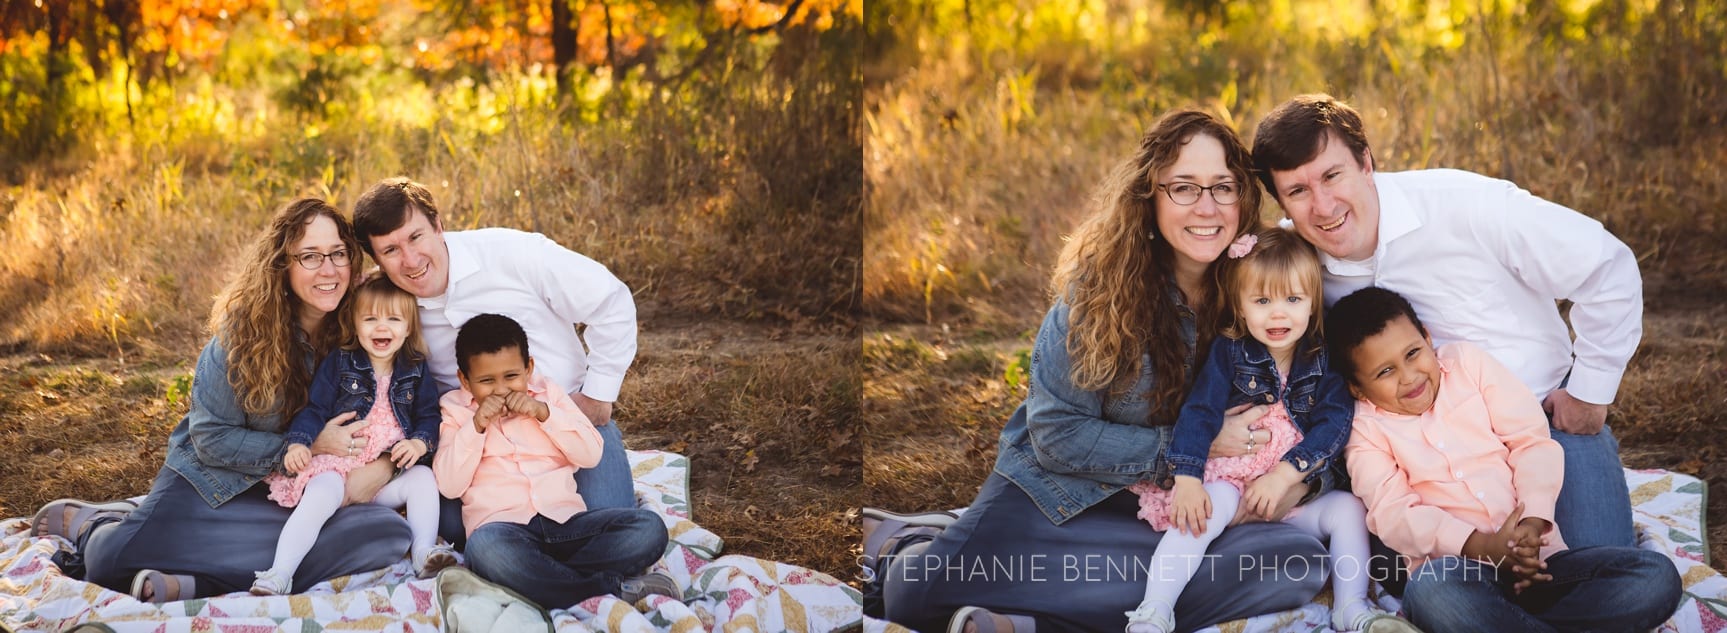 Stephanie Bennett Photography Northfield MN.   Family Photographer Eagan MN | Rosemount MN Family Session